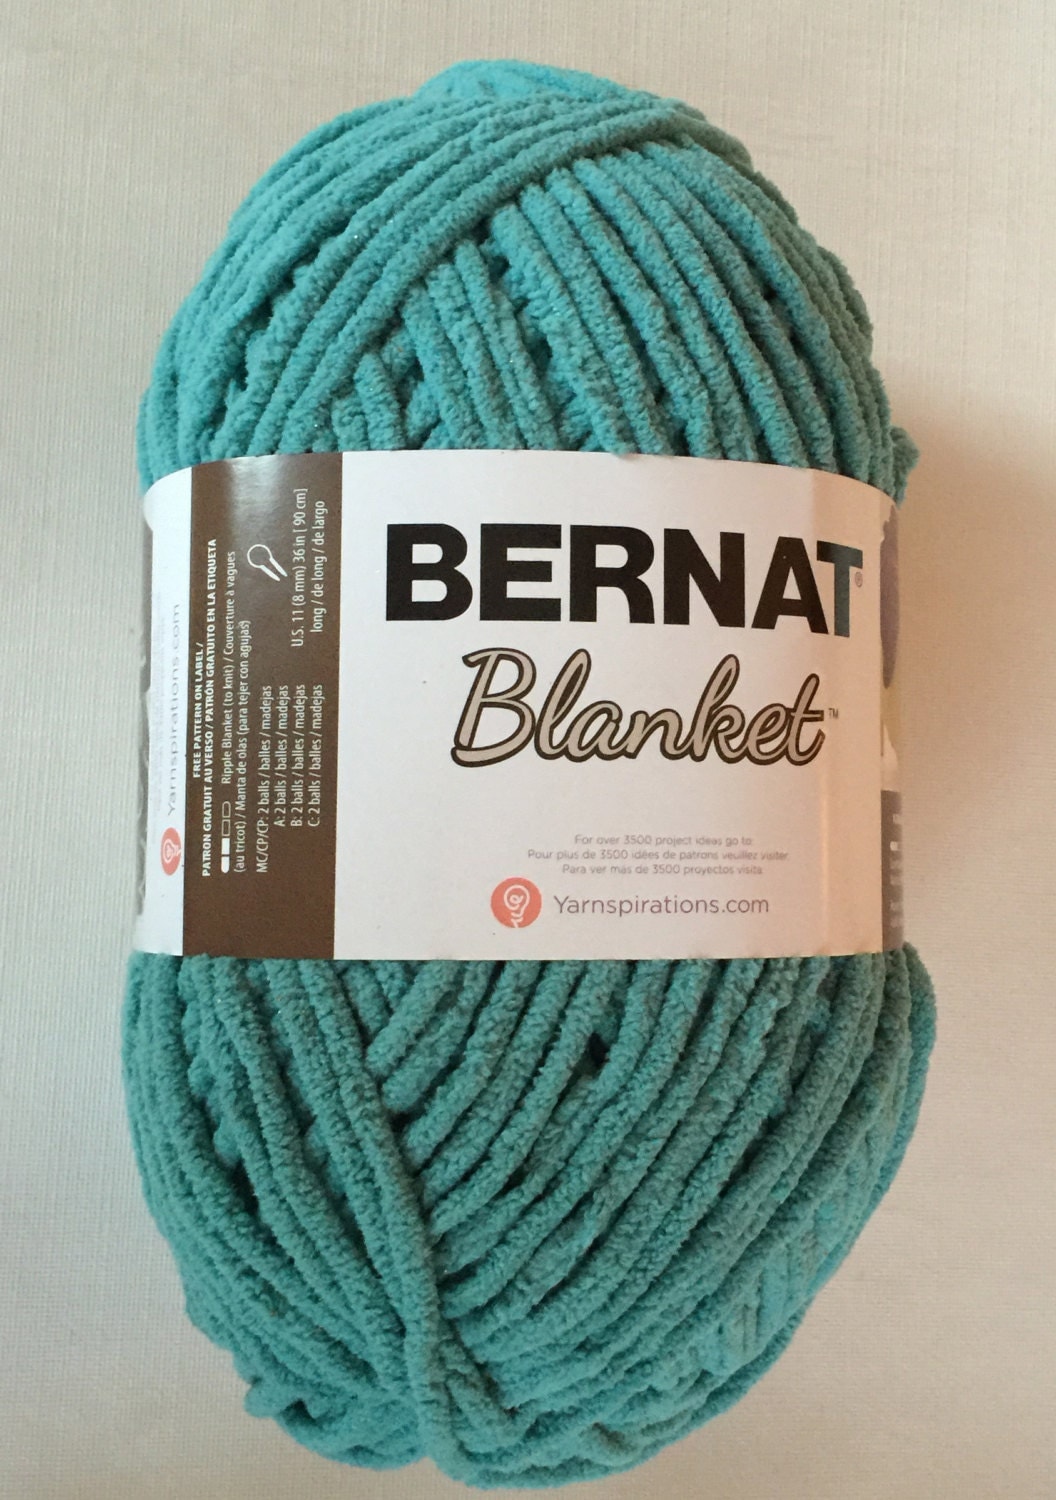 The 5 Best Bernat Blanket Yarns [Ranked] | Product Reviews ...